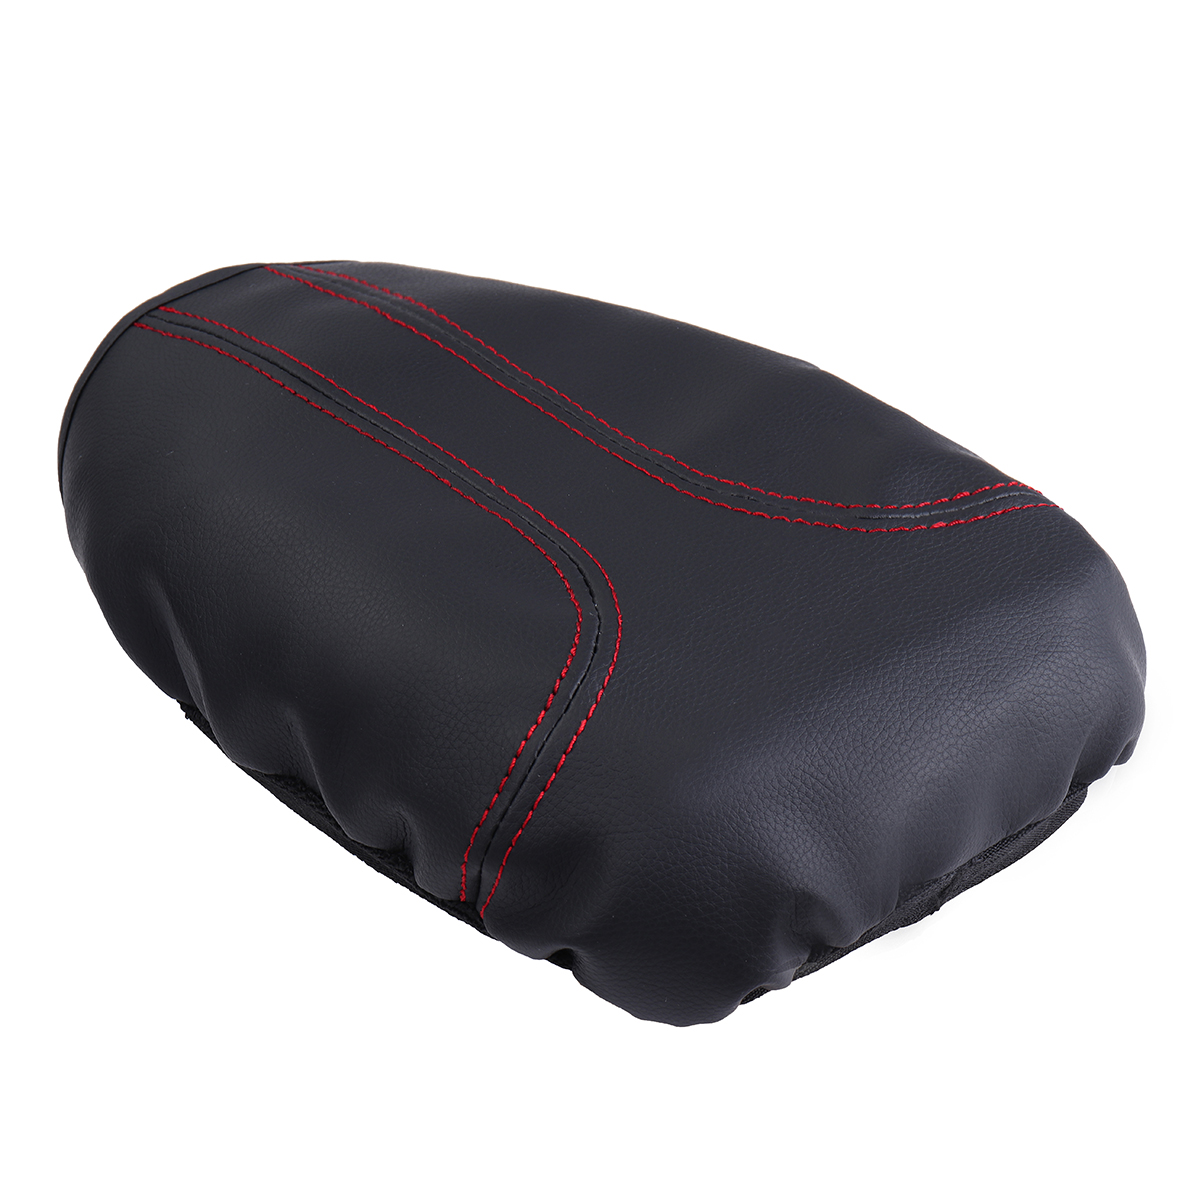 PU Leather Car Console Center Arm Rest Cover Cushion for Nissan X-Trail 17-18 - Auto GoShop